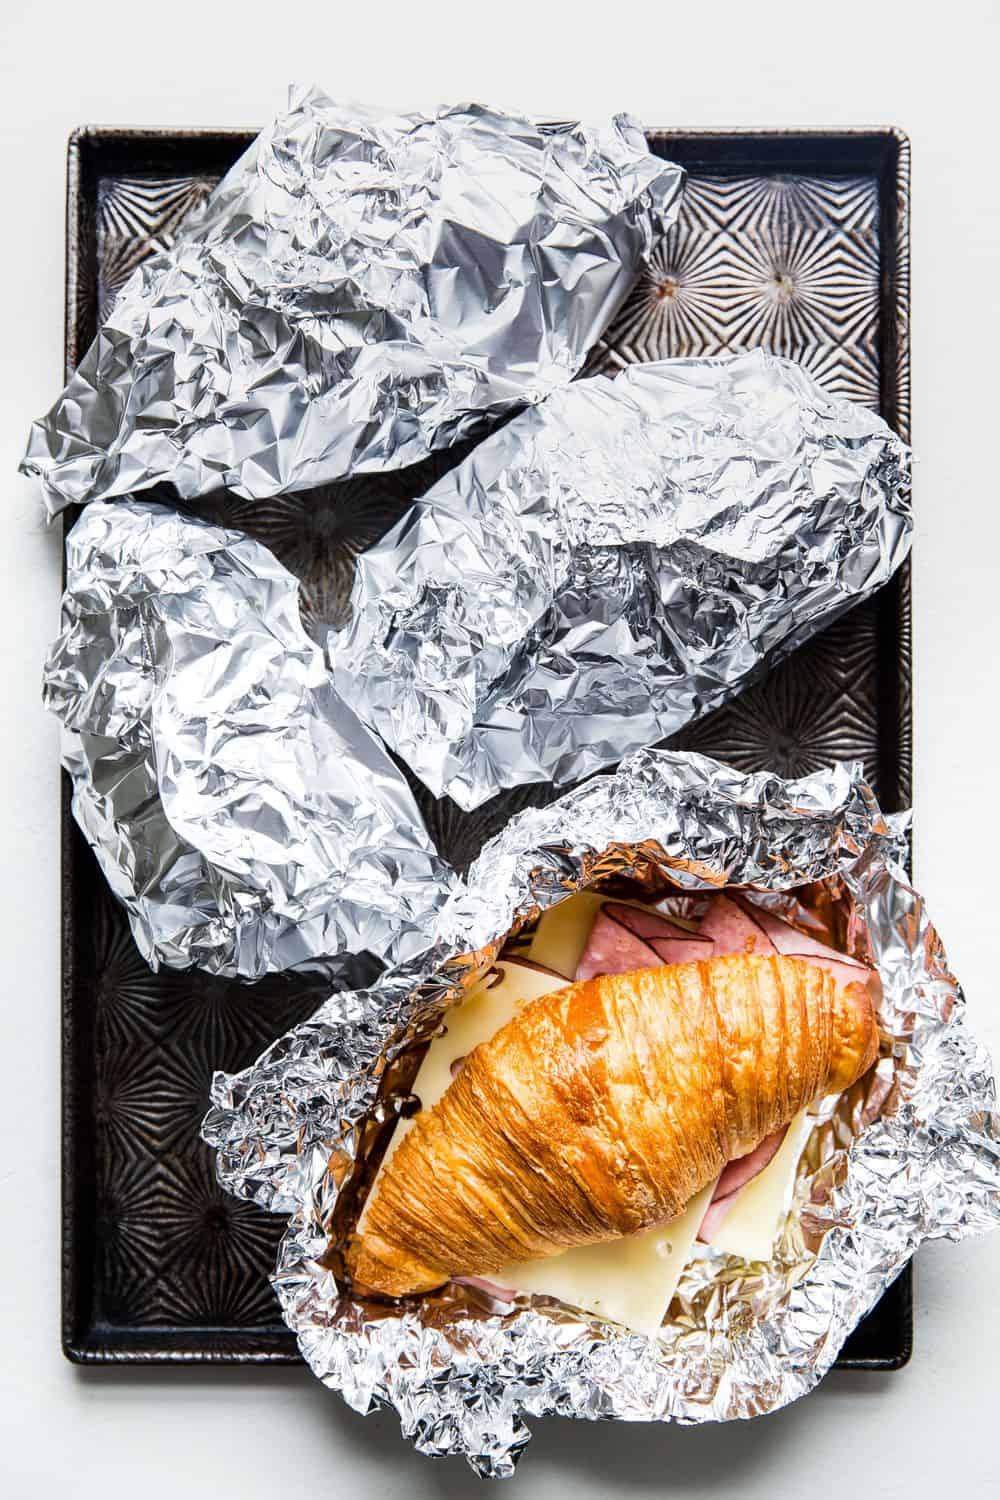 Wrapping a Monte Cristo Croissant Sandwich in tin foil.